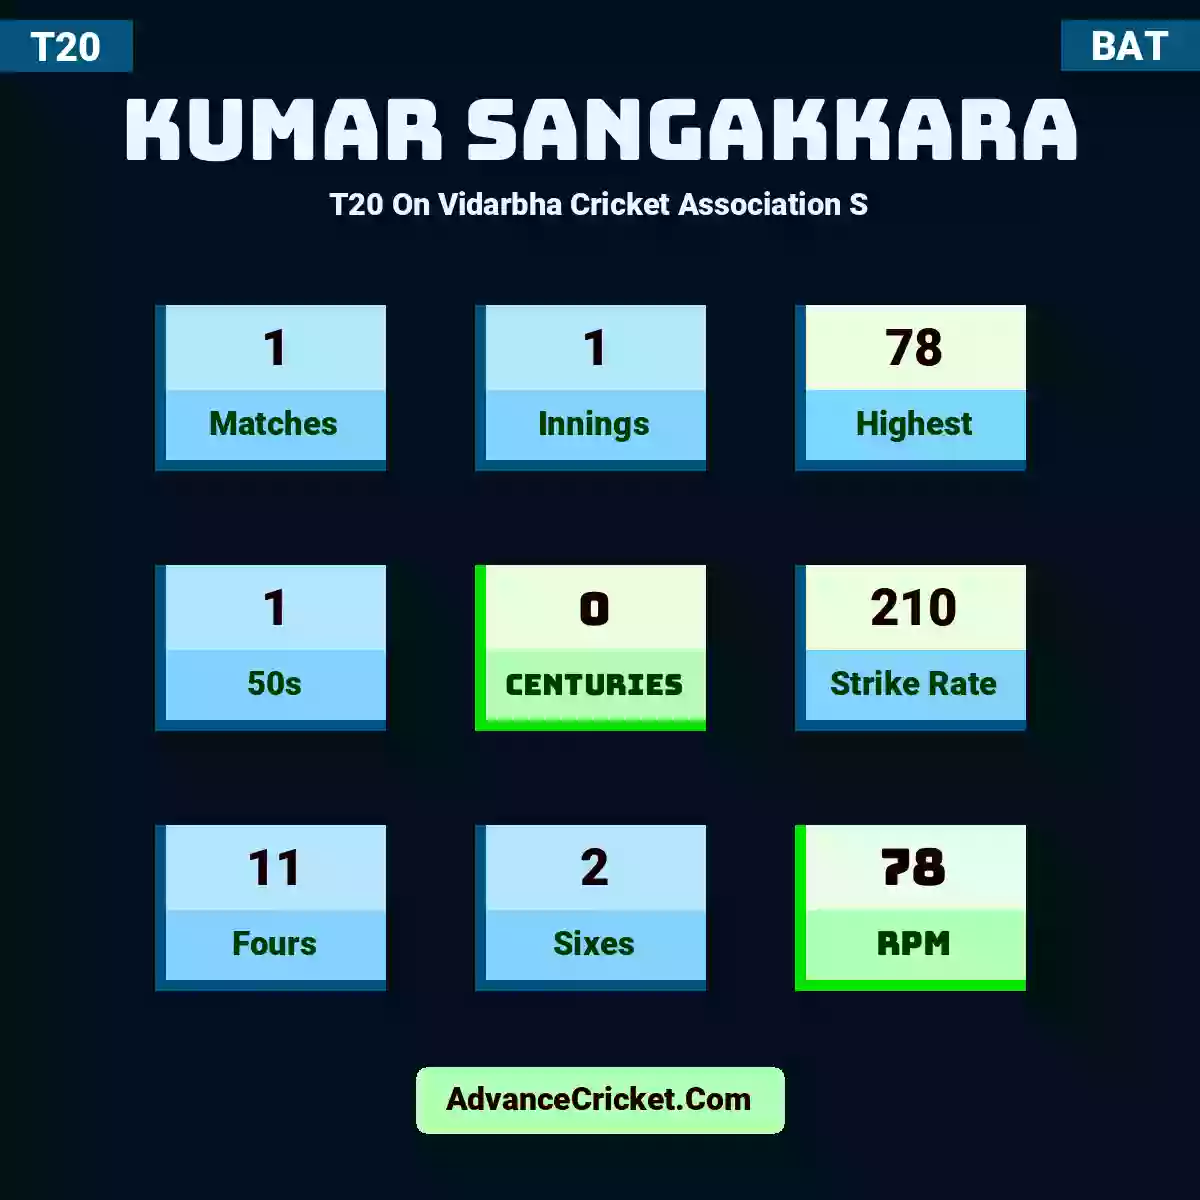 Kumar Sangakkara T20  On Vidarbha Cricket Association S, Kumar Sangakkara played 1 matches, scored 78 runs as highest, 1 half-centuries, and 0 centuries, with a strike rate of 210. K.Sangakkara hit 11 fours and 2 sixes, with an RPM of 78.